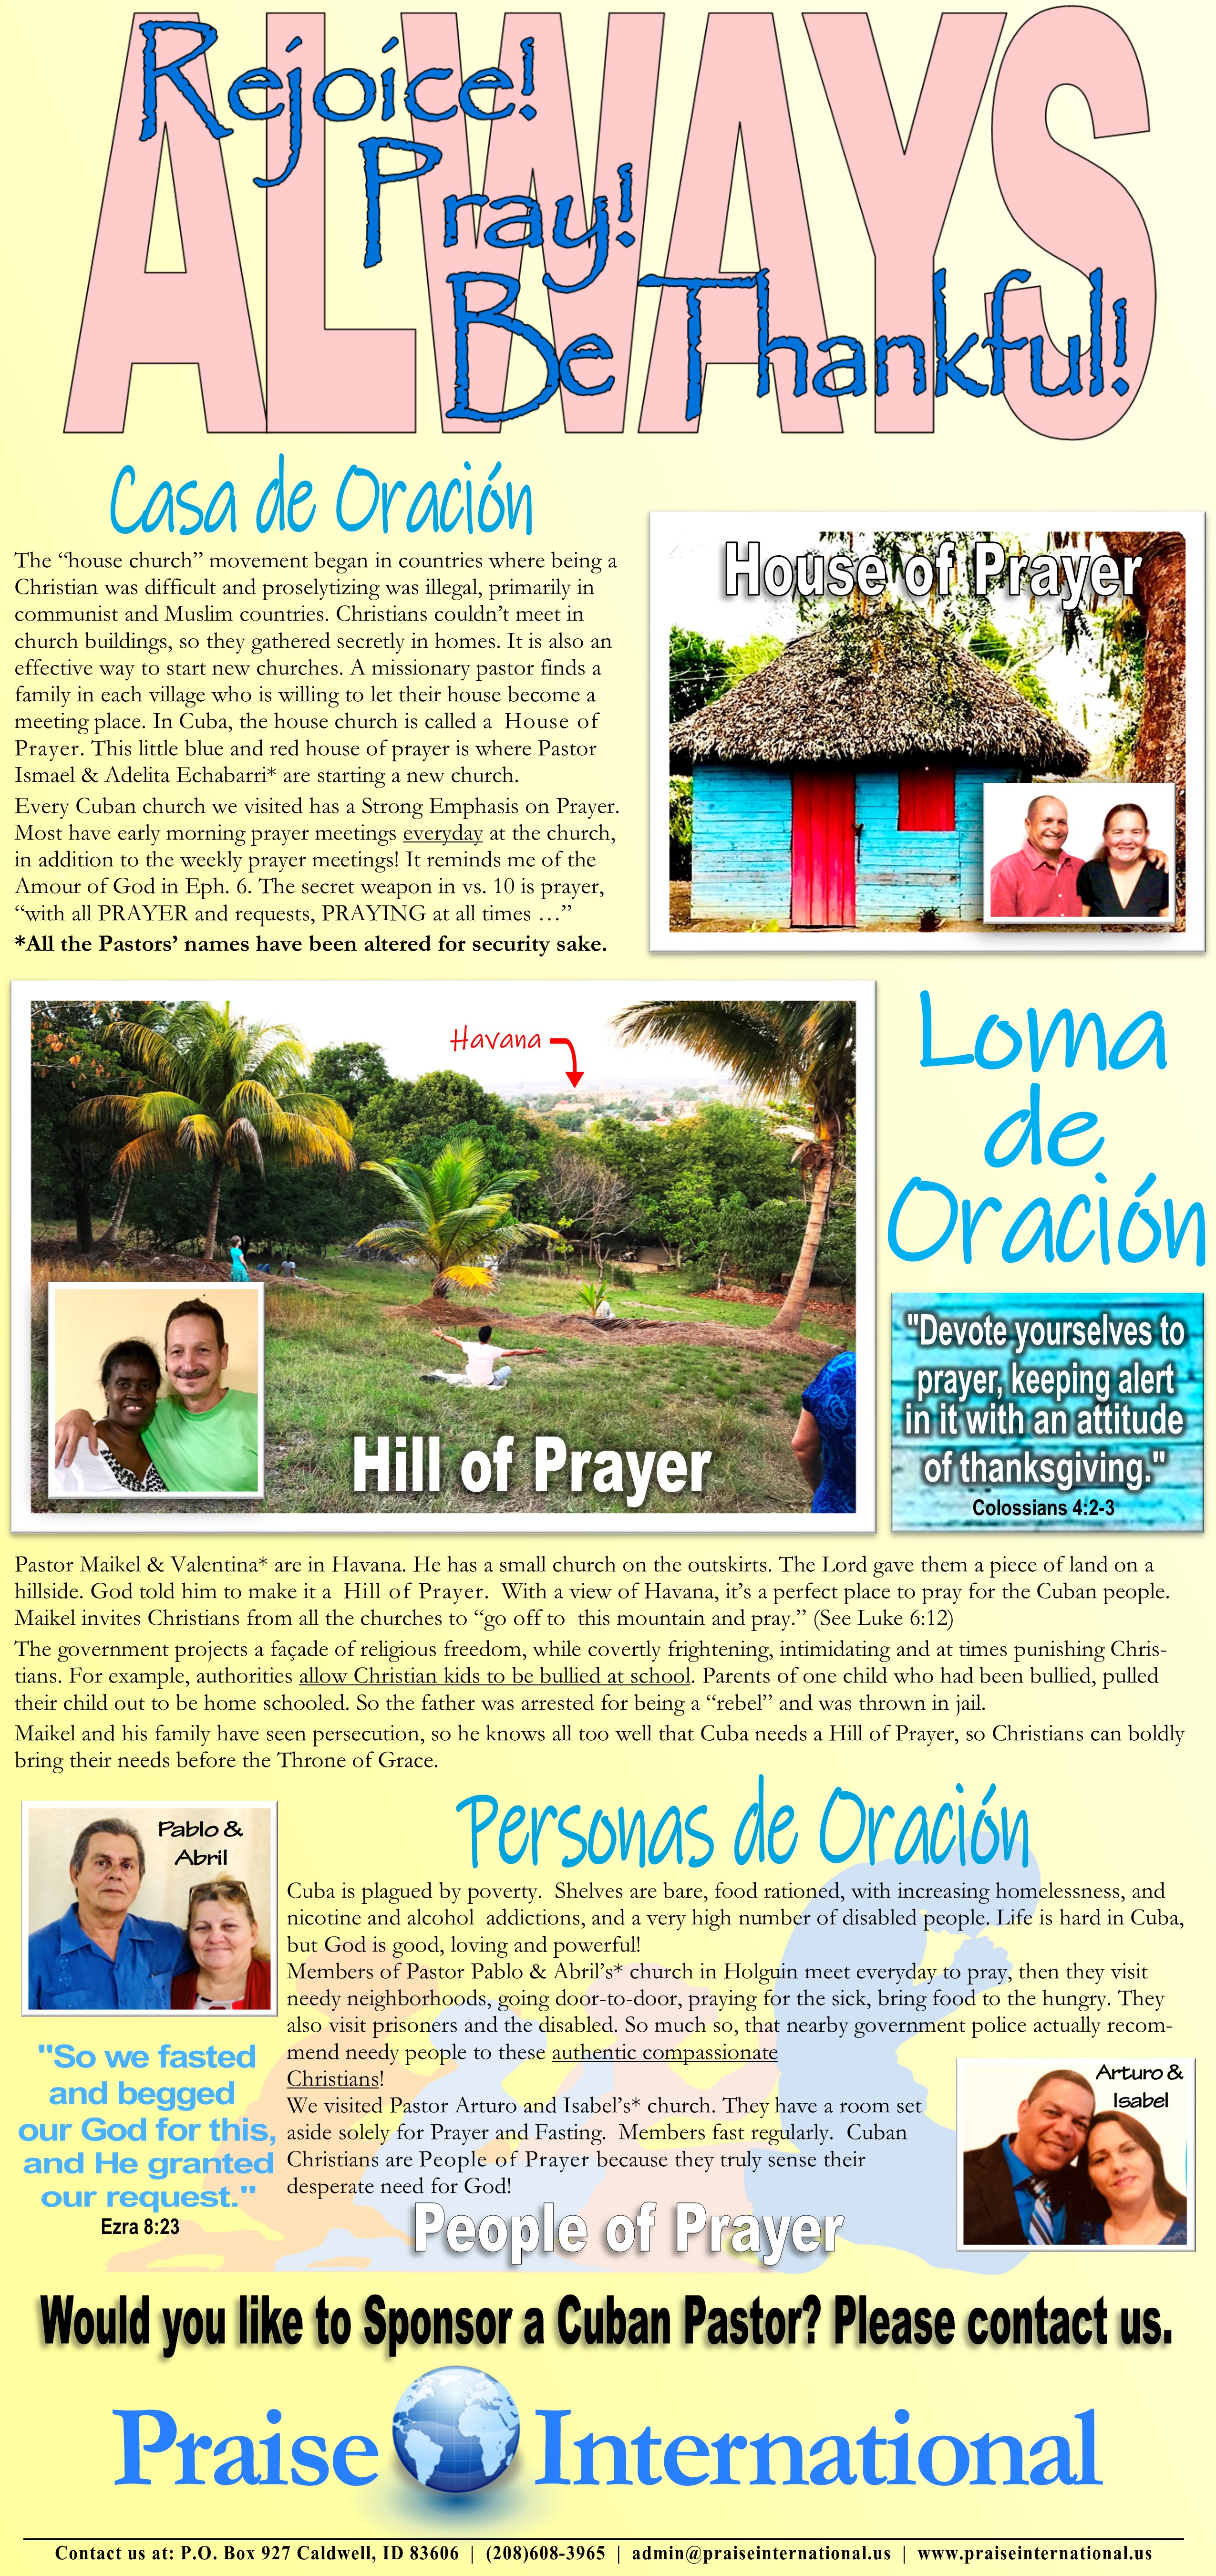 202005 - Notes of Praise Prayer in Cuba